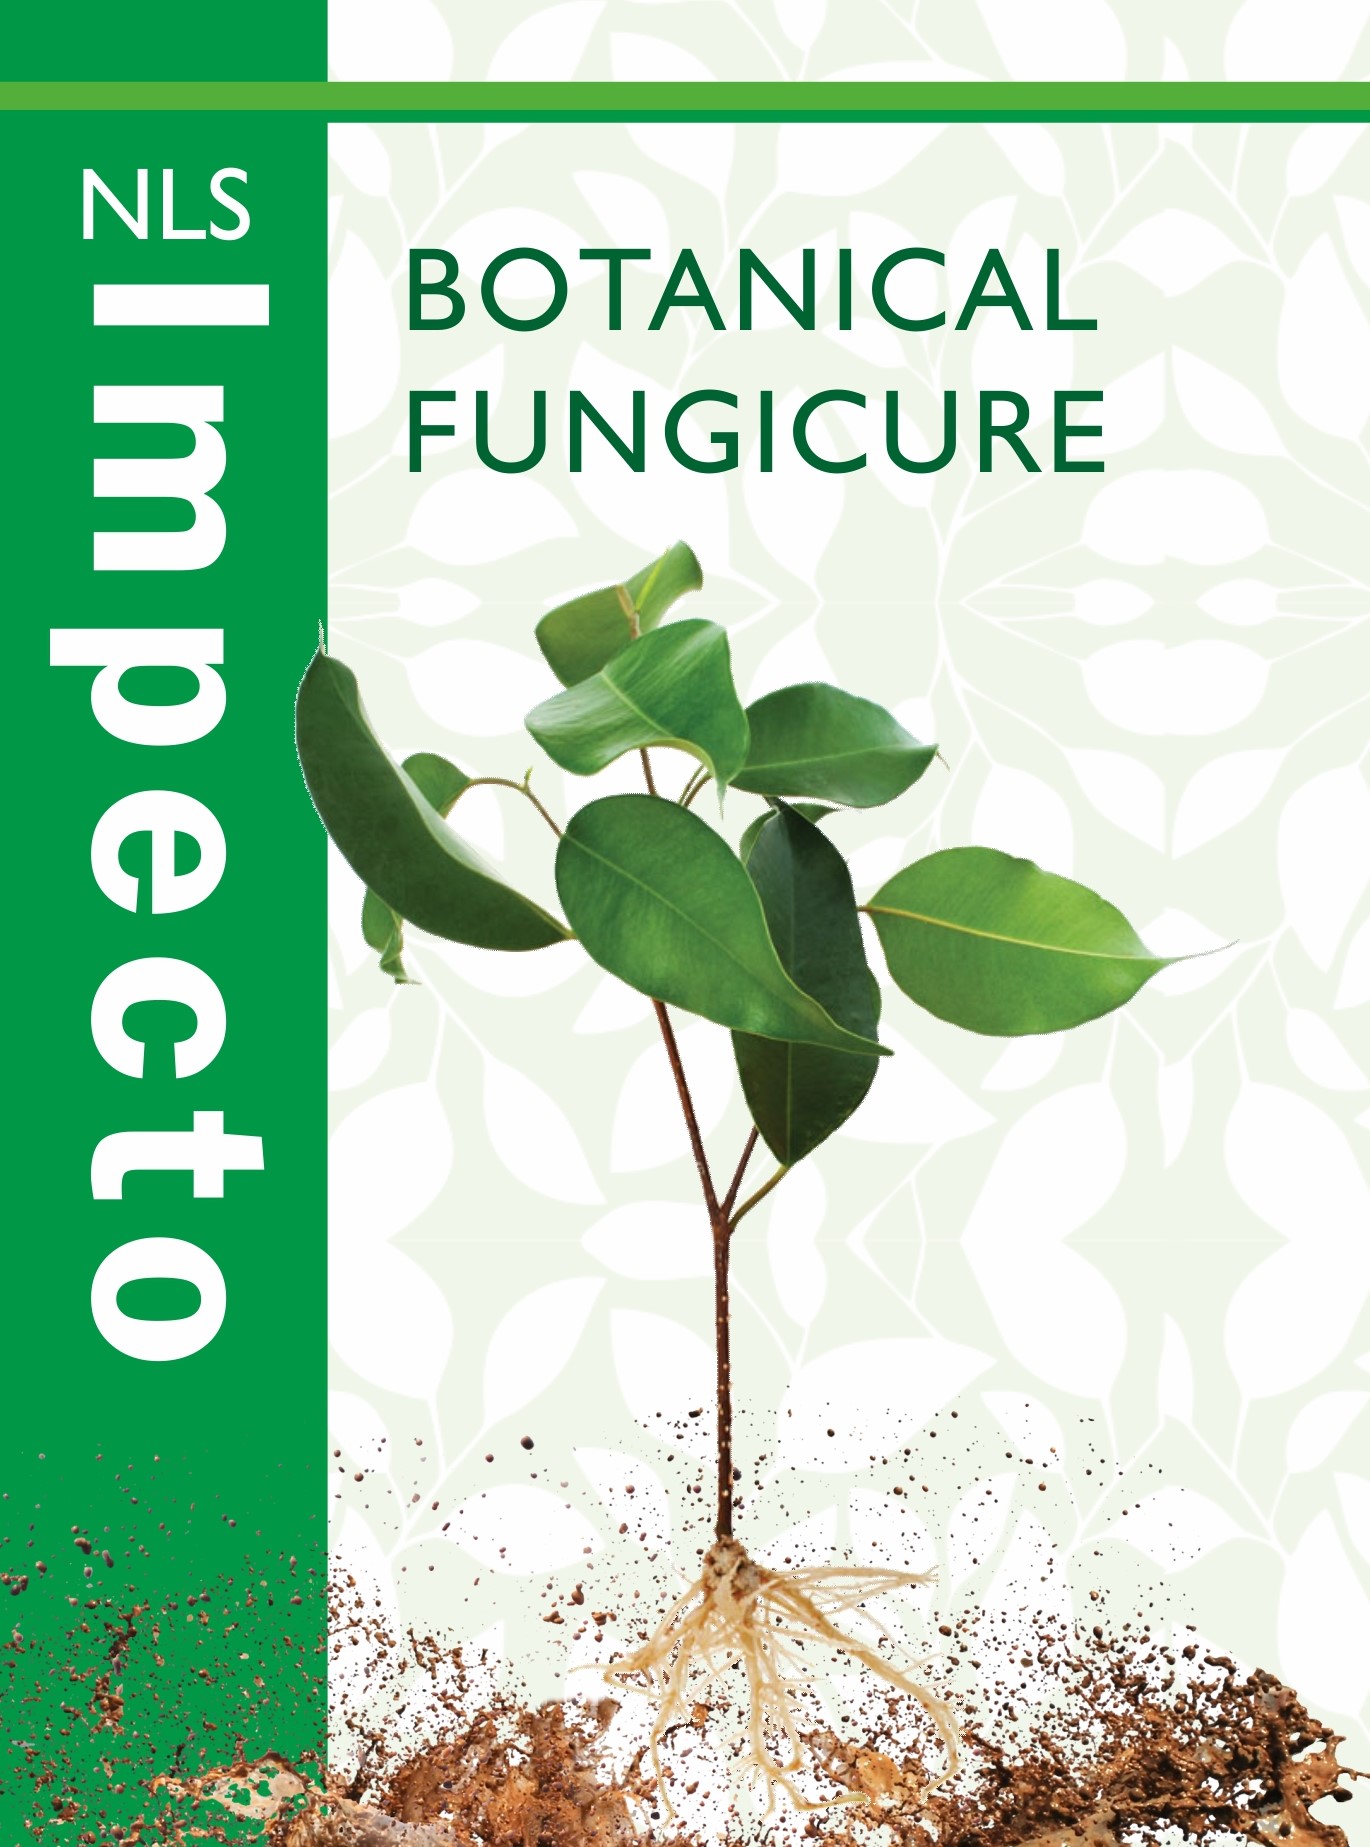 Impecto (Botanical Fungicure)